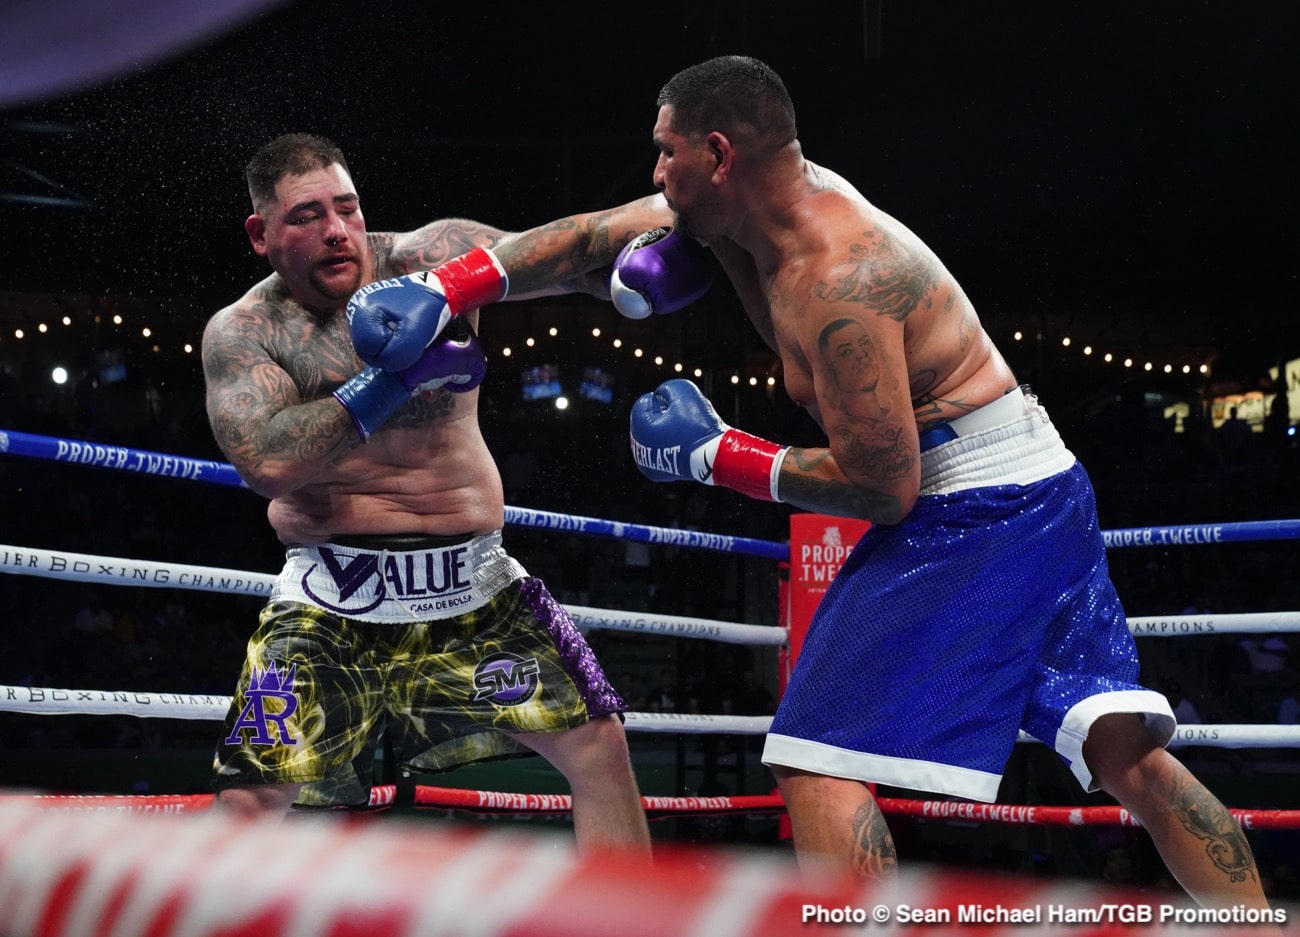 Chris Arreola boxing photo and news image